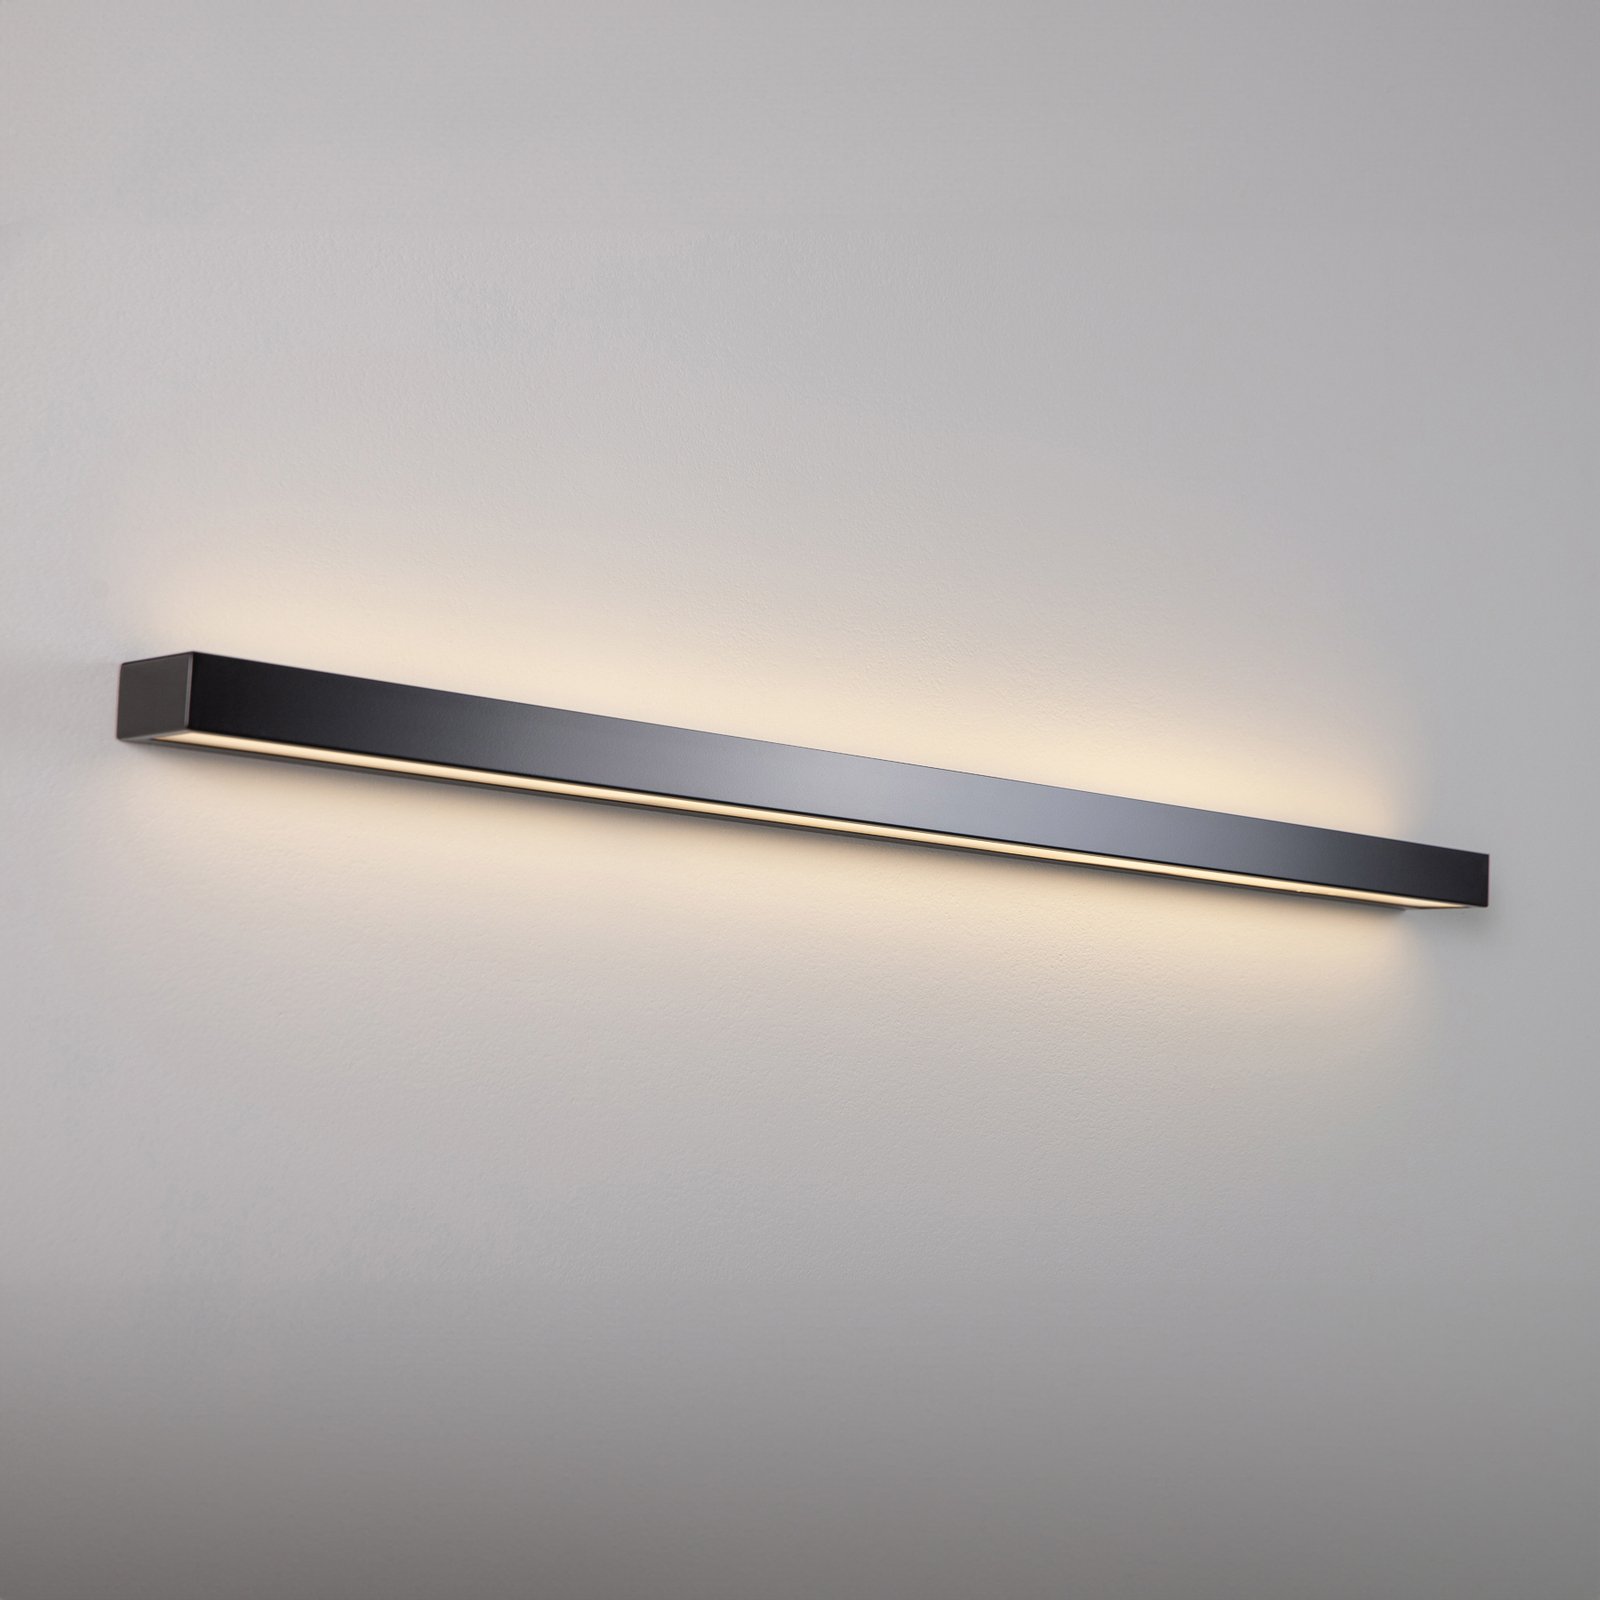 Mera LED wall light, width 120 cm, black, 3,000 K